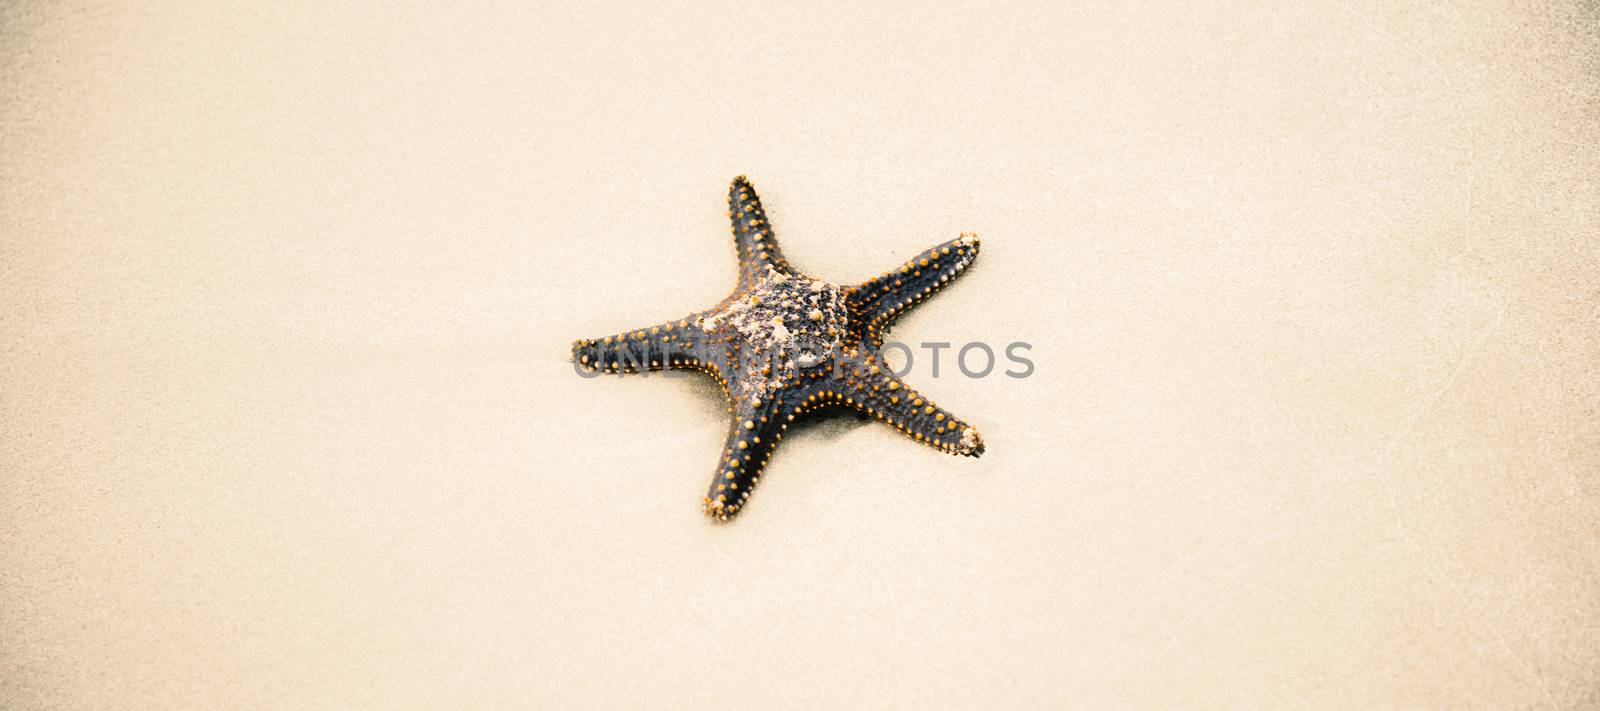 Starfish on the beach sand. Close up. by artistrobd